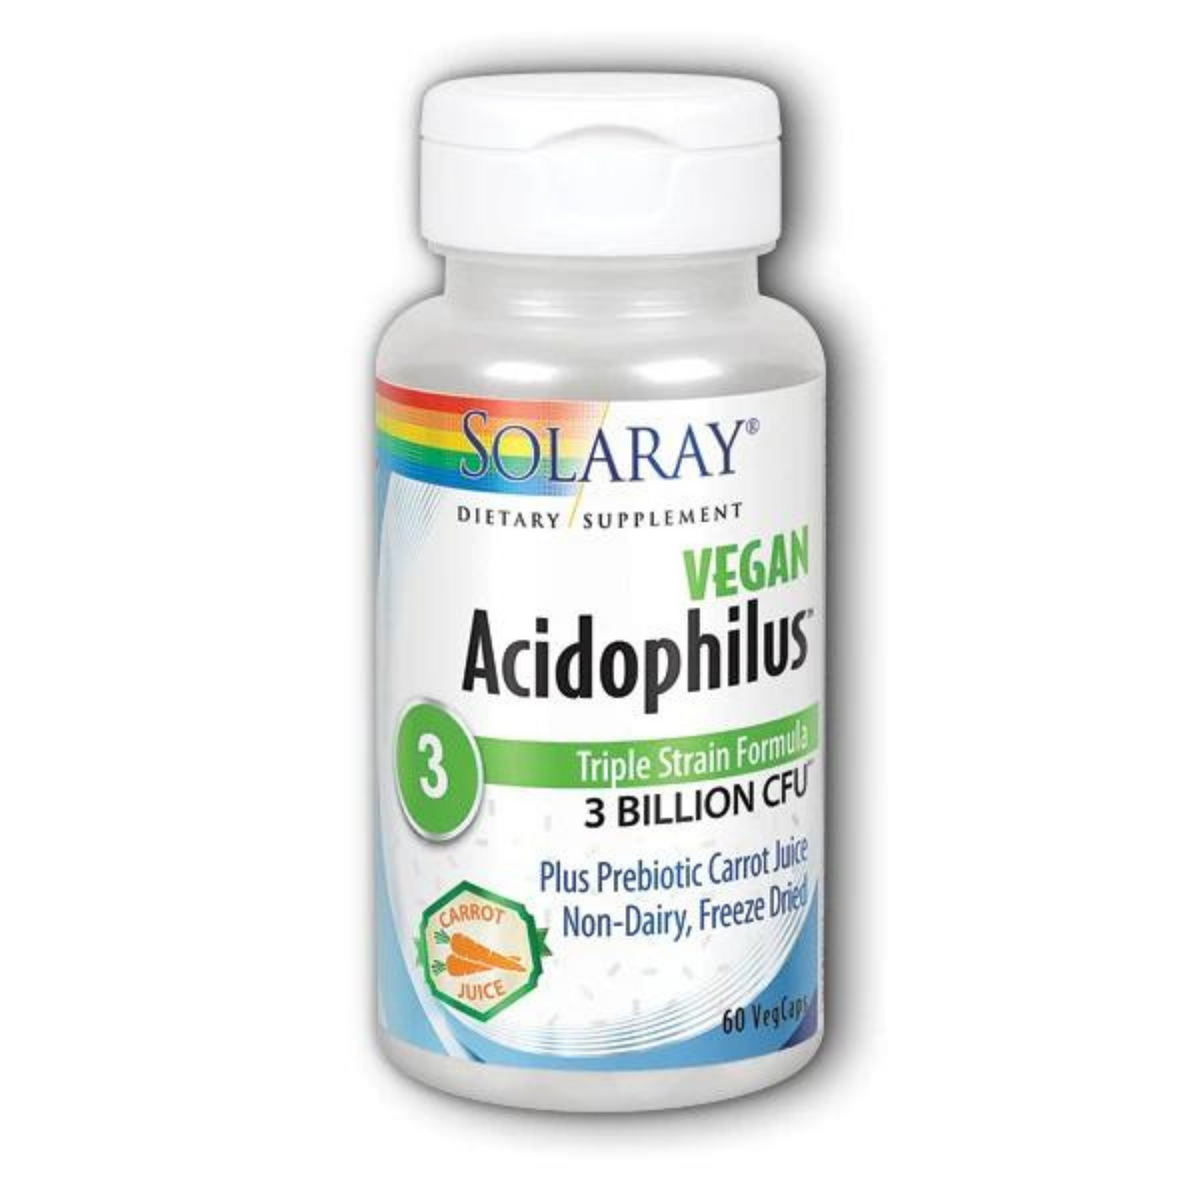 Primary Image of Solaray Acidophilus plus carrot juice (60 count) 